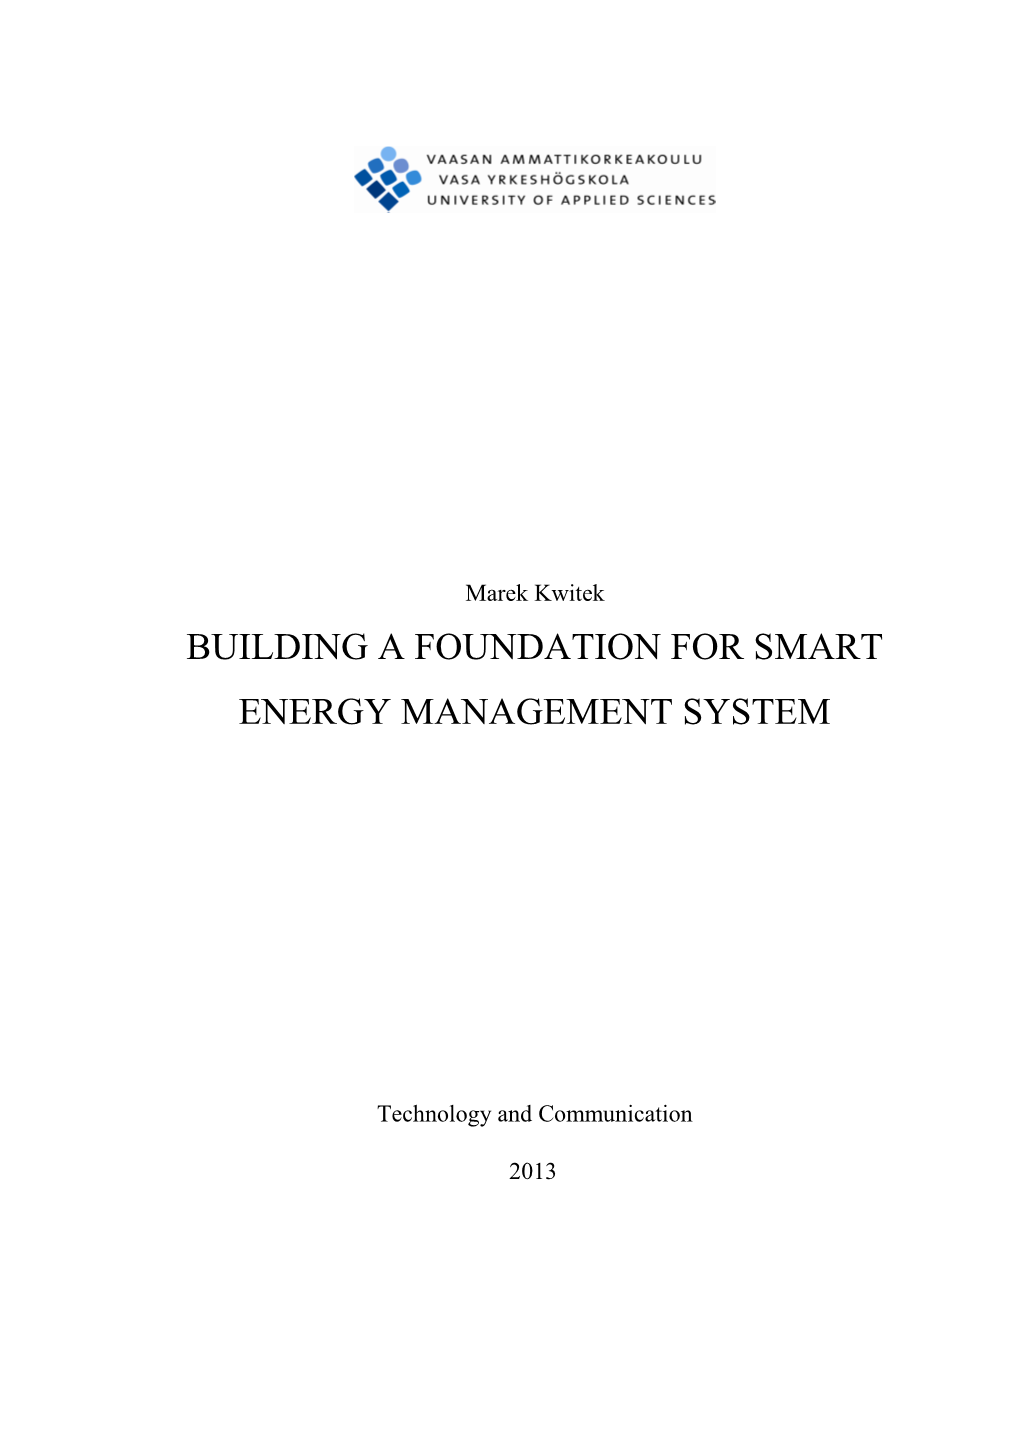 Building a Foundation for Smart Energy Management System